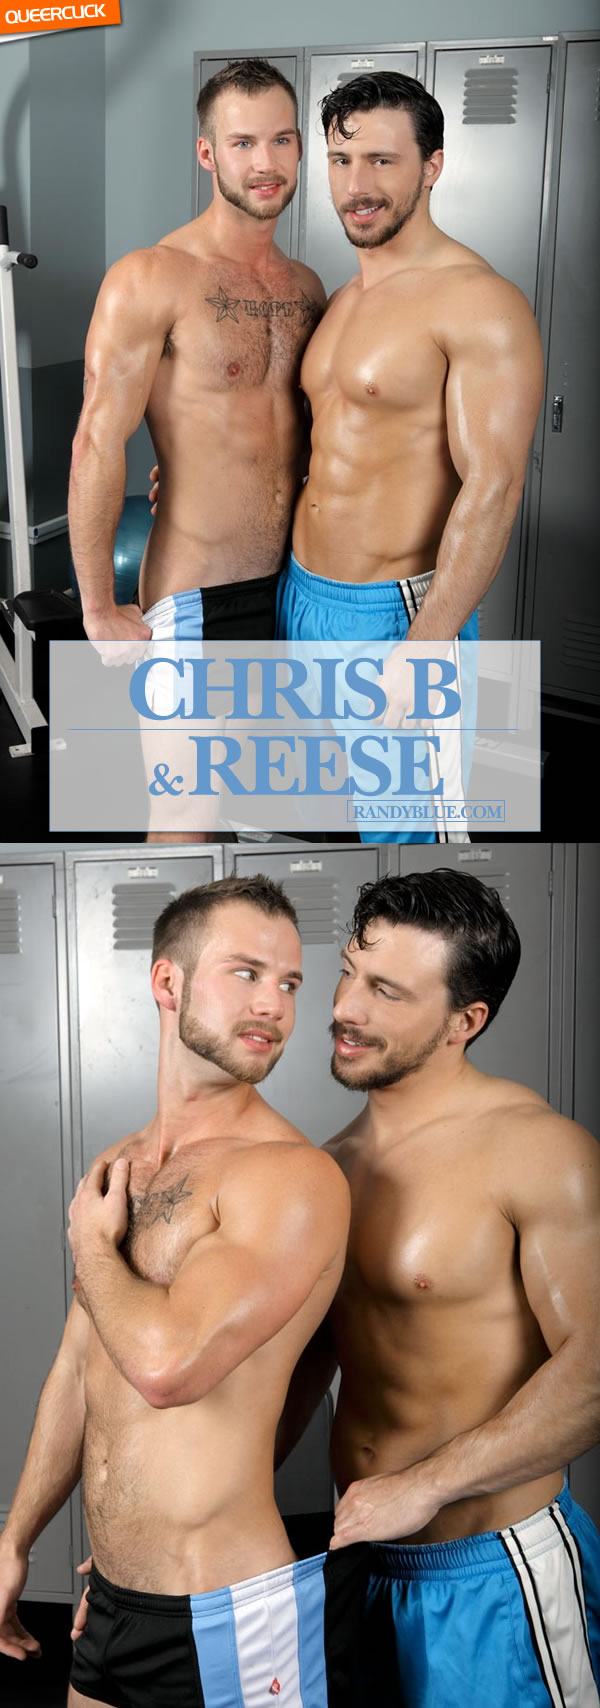 Randy Blue: Chris B & Reese